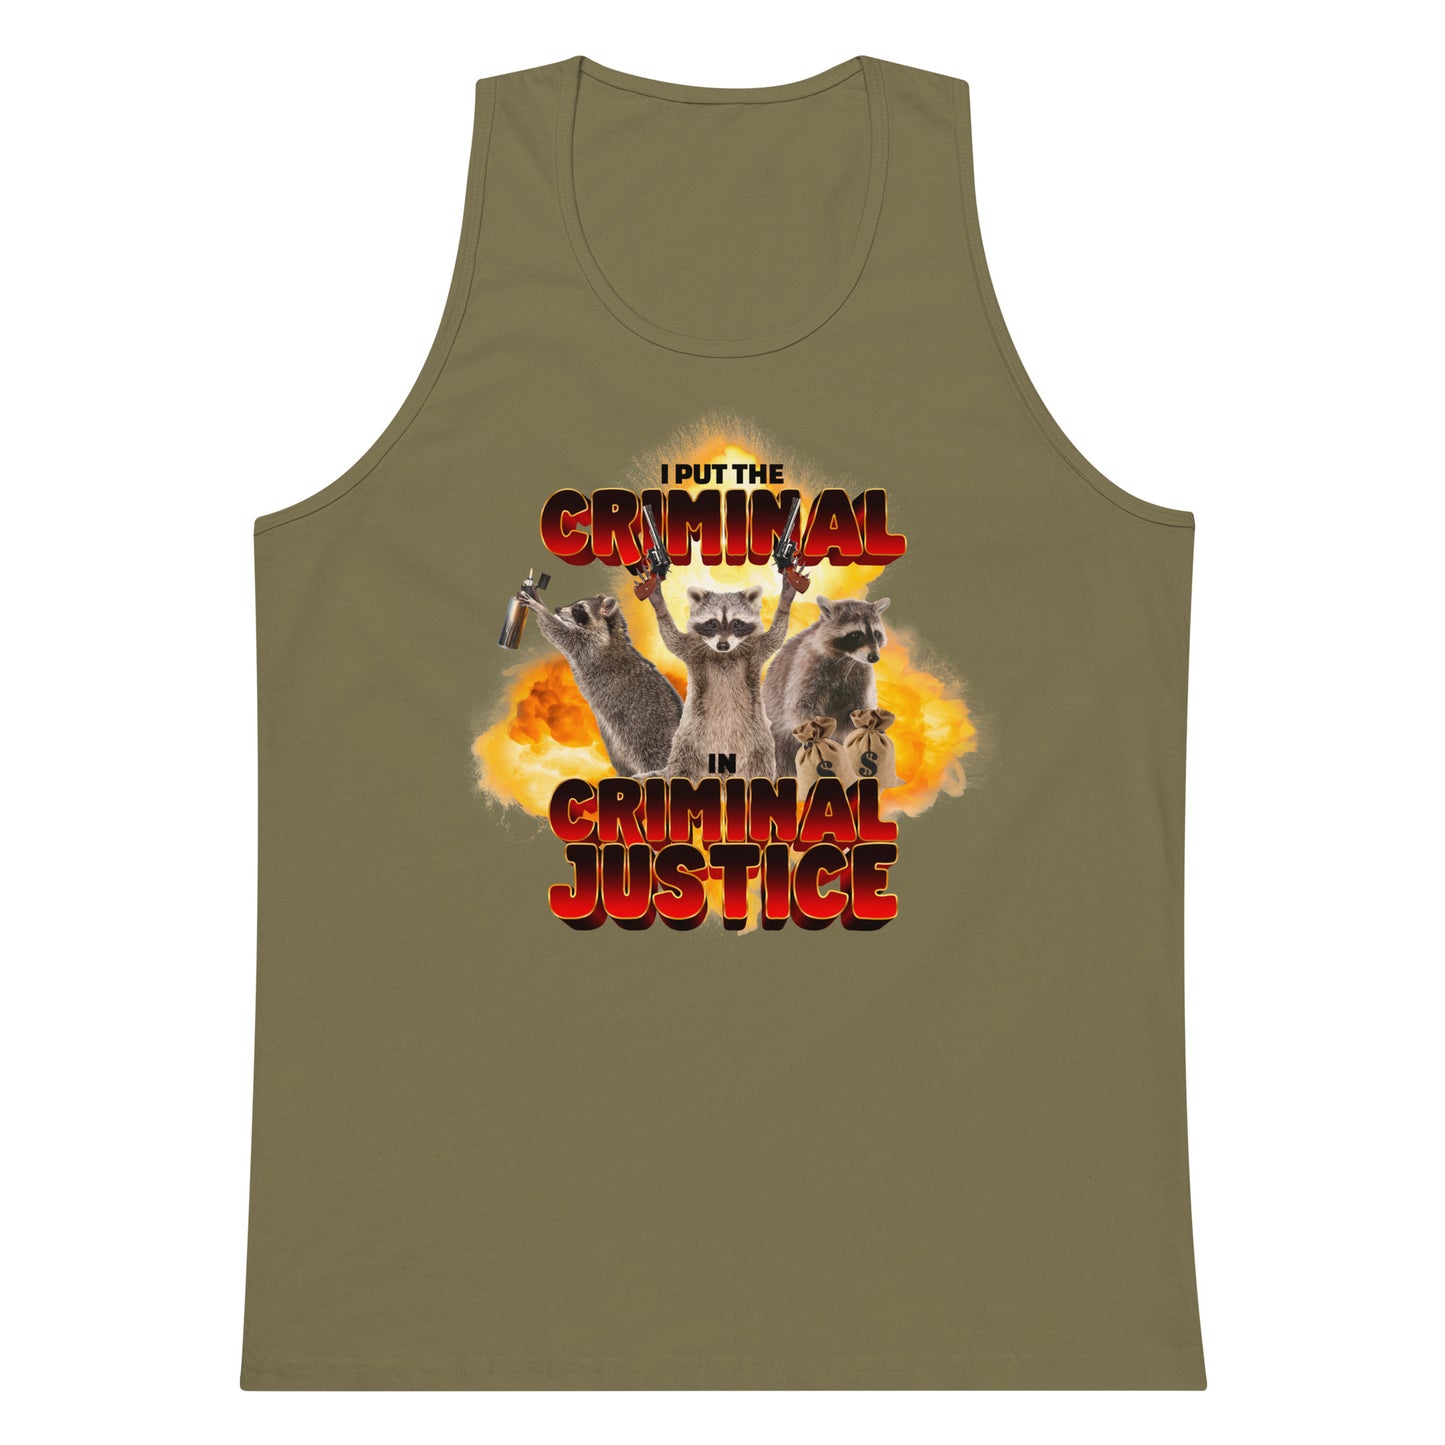 I Put the Criminal in Criminal Justice tank top